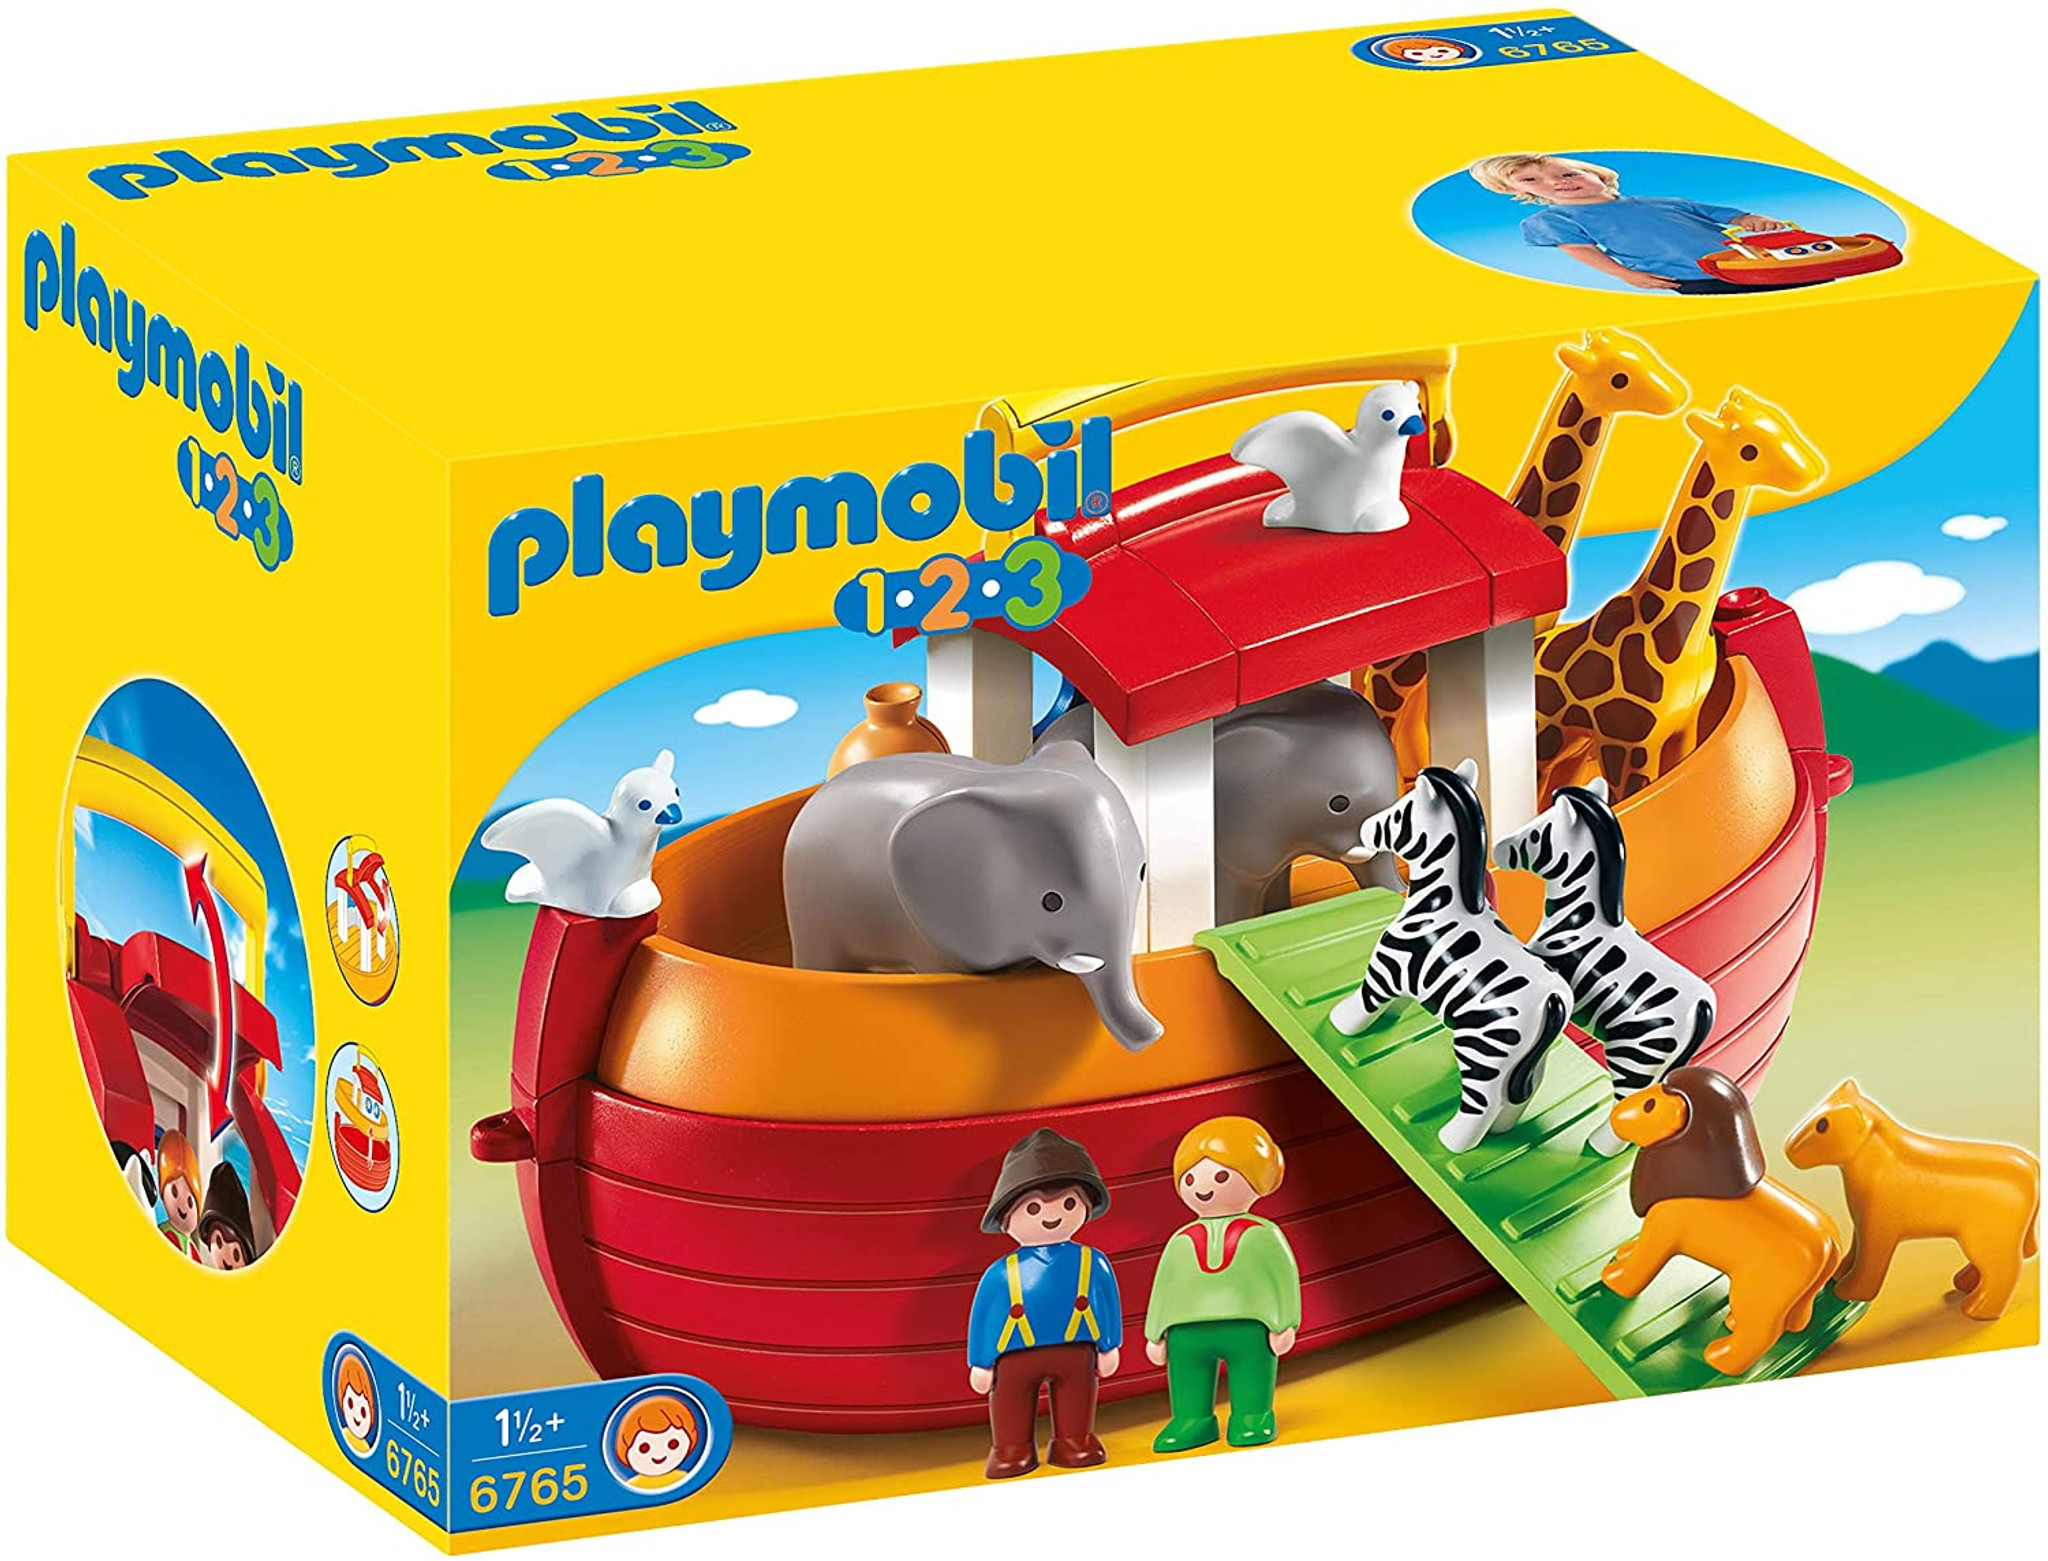 Playmobil - My Take Noah's Ark - The Barn